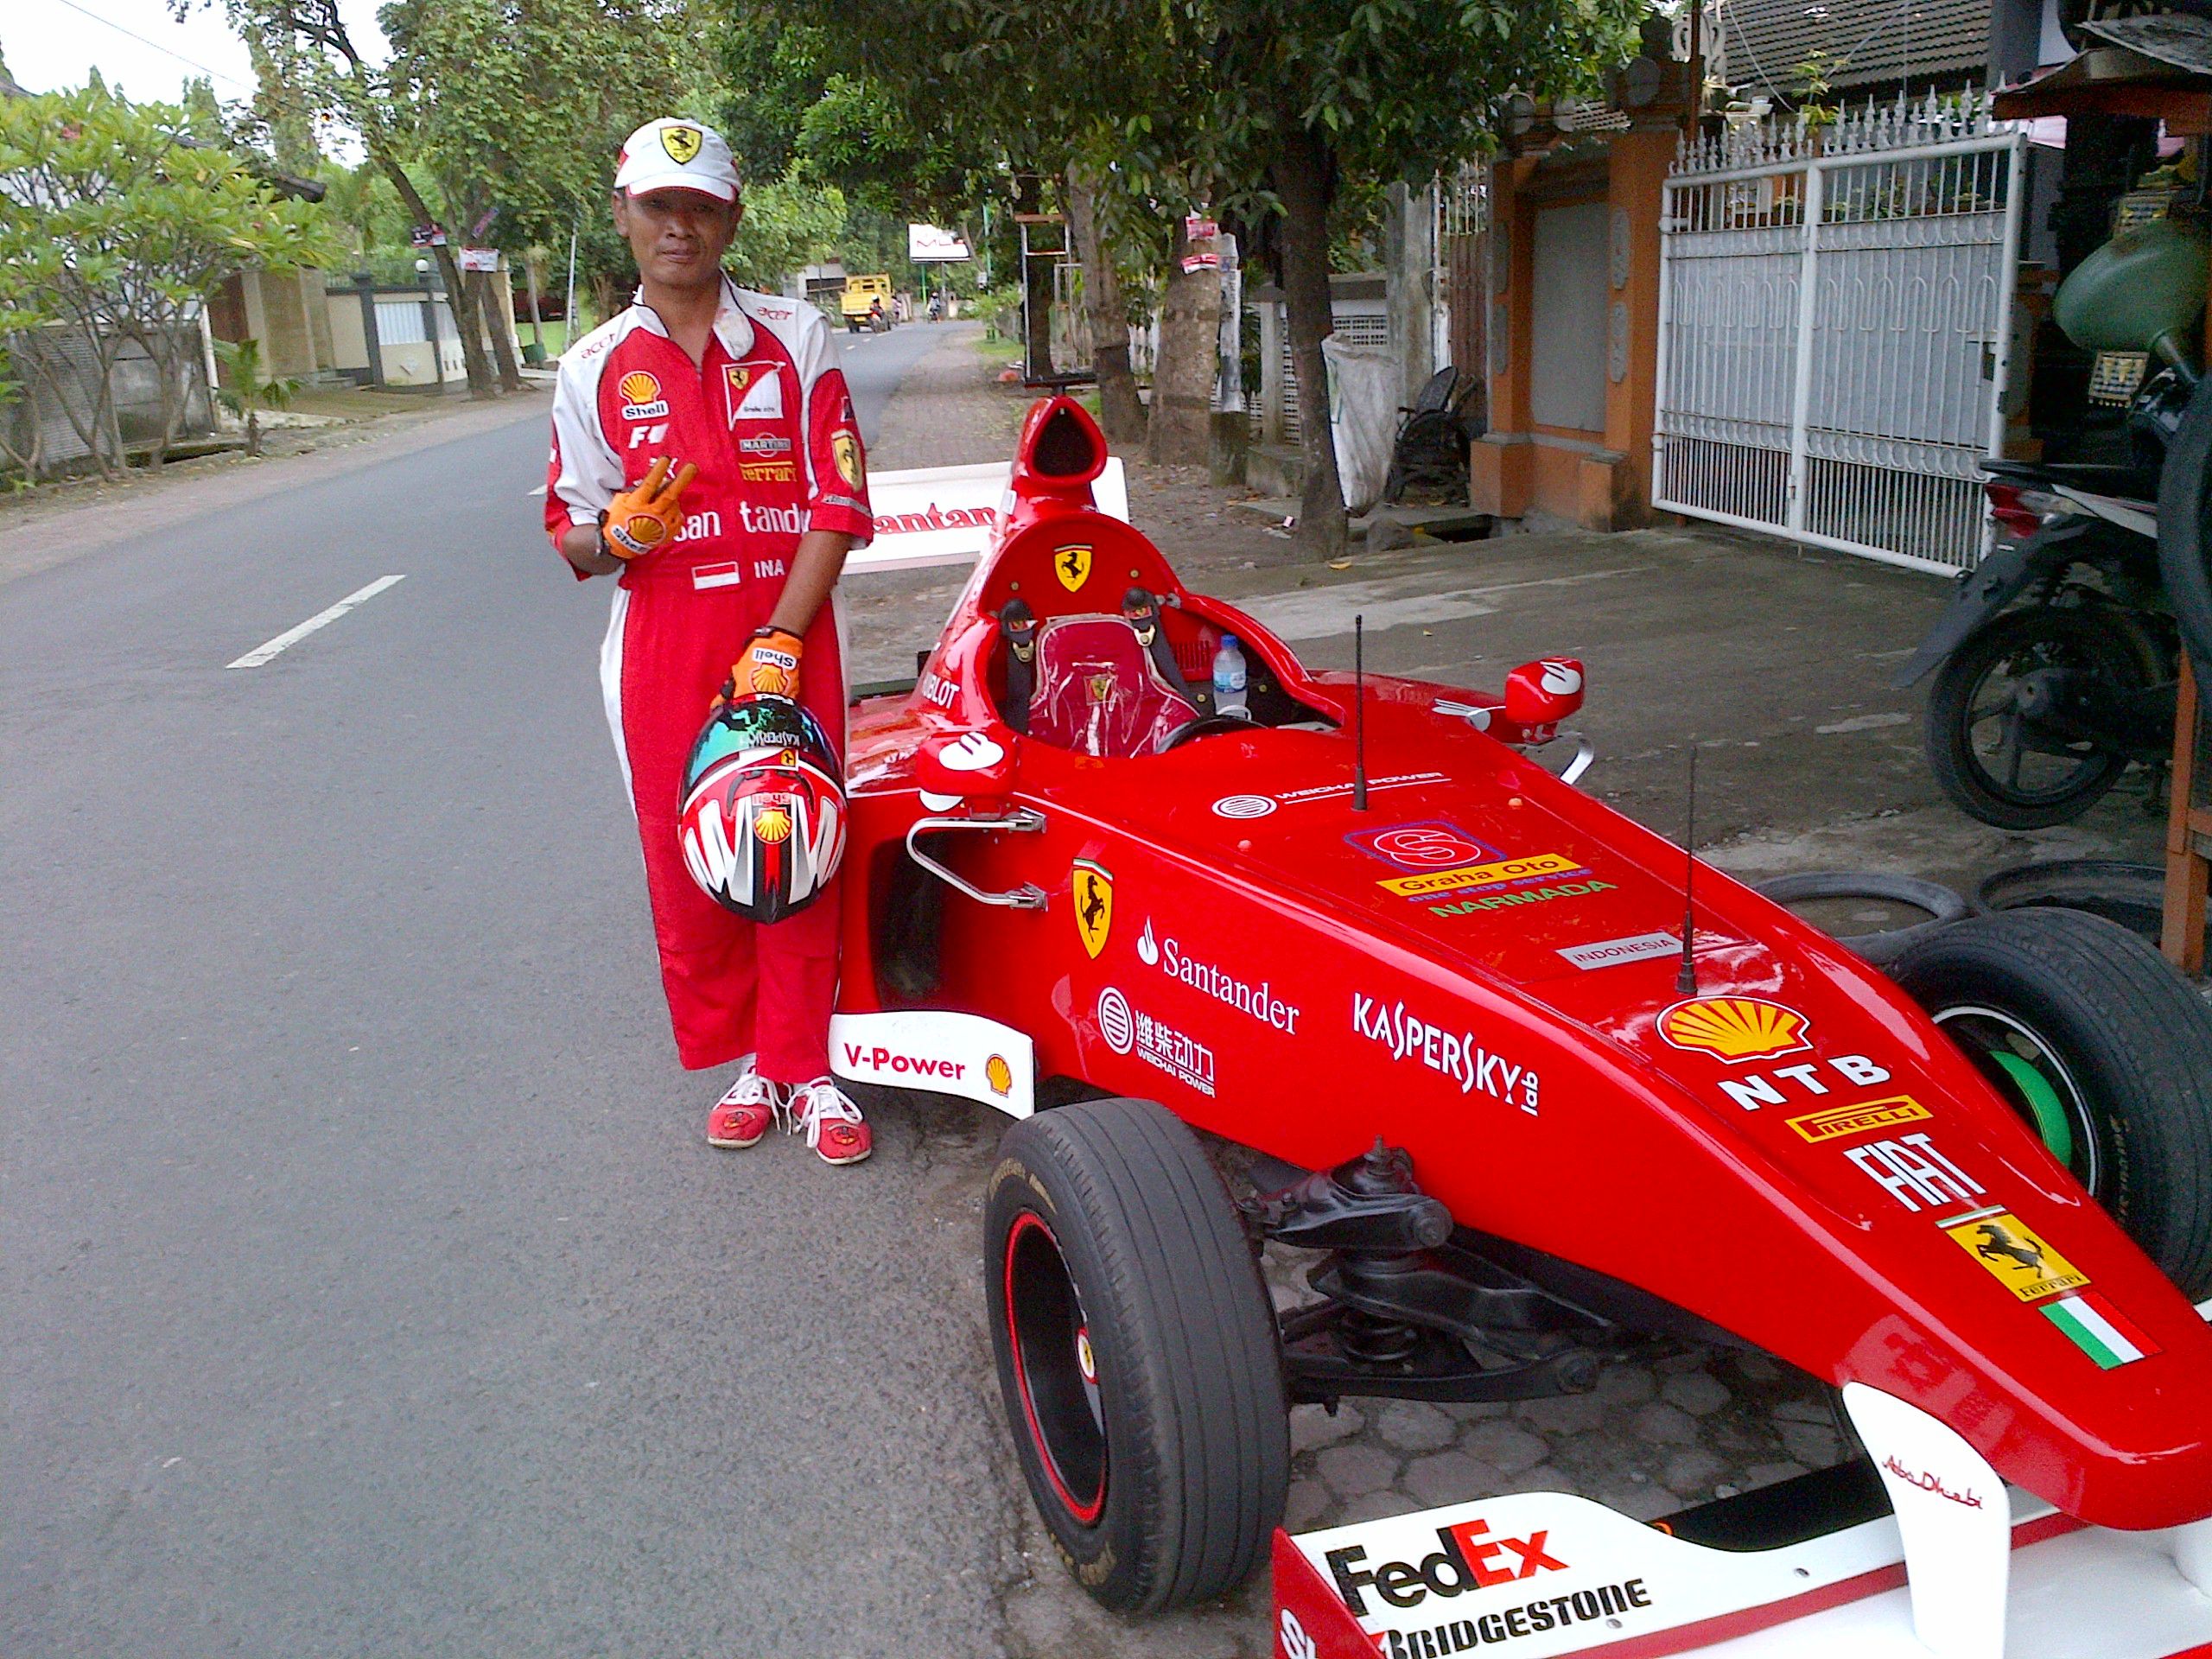 Mobil F1 di jalan umum gan (with pic+video) ngakak